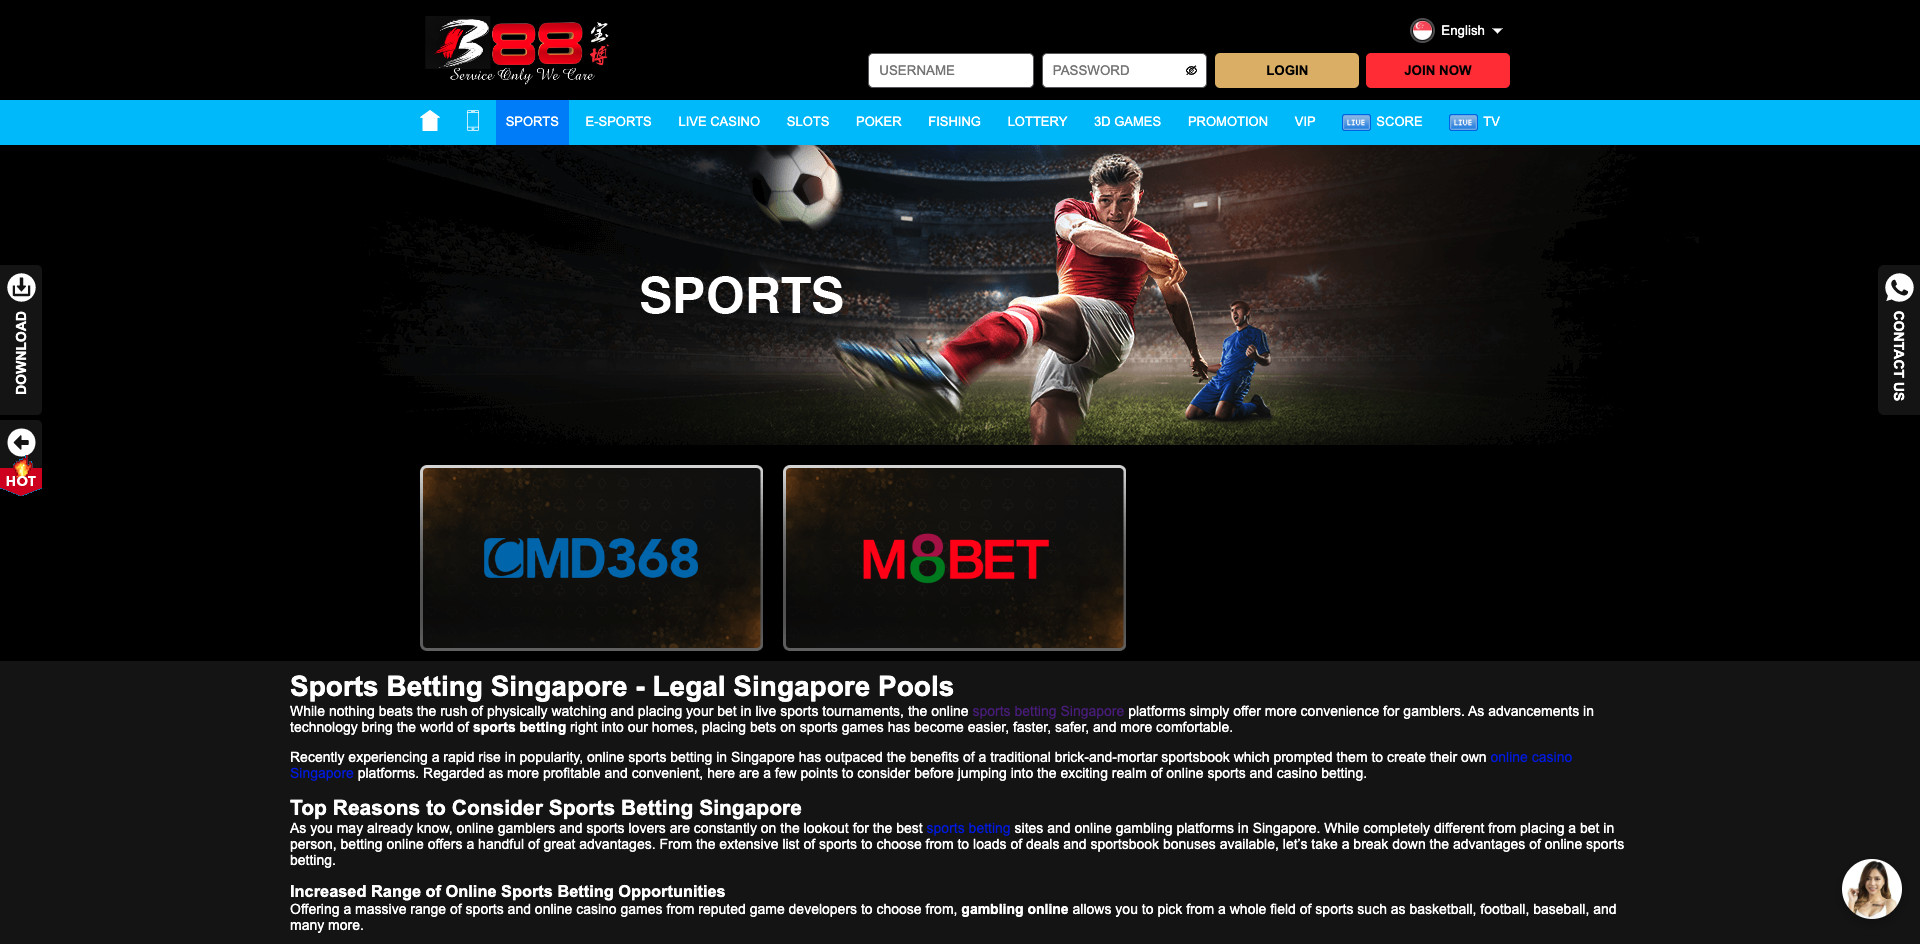 b88 sportsbook - sports betting page screen